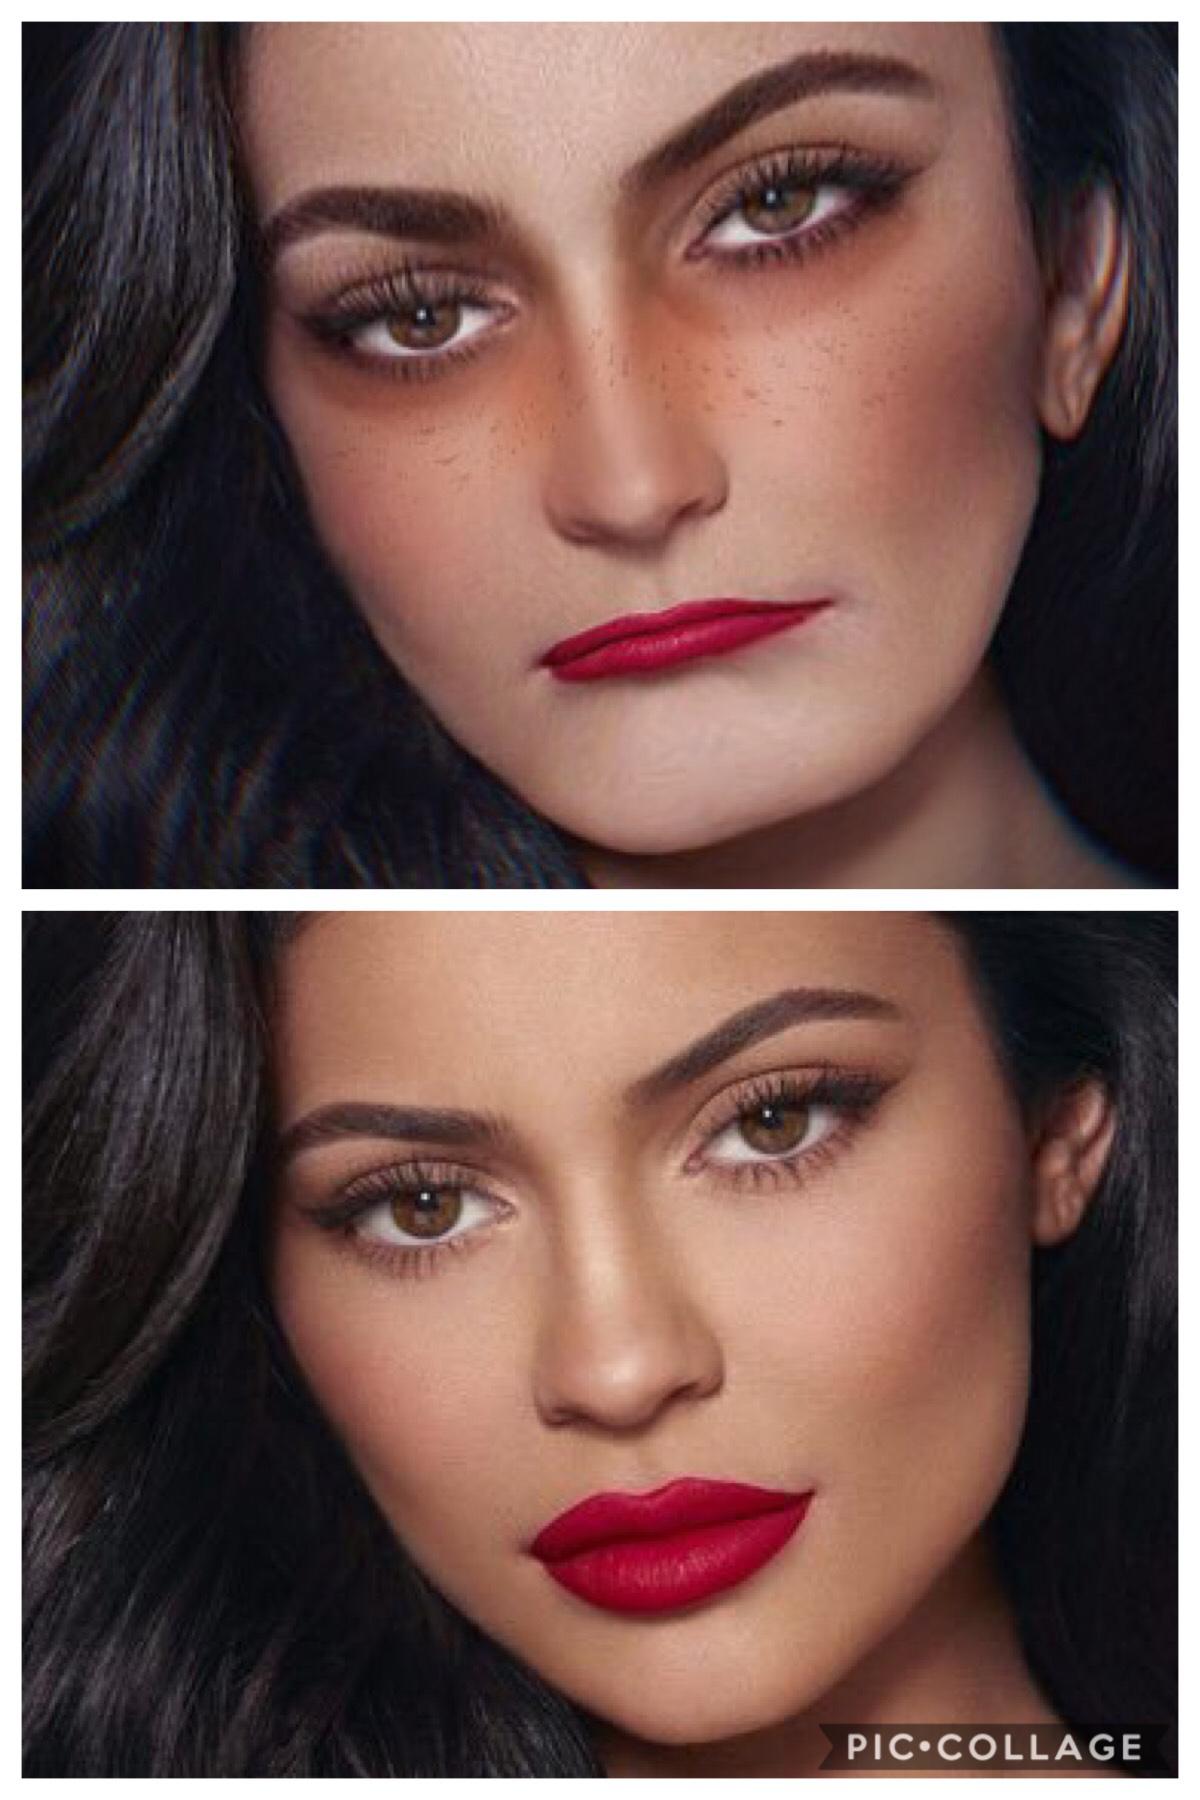 Kylie Jenner photoshop transformation 